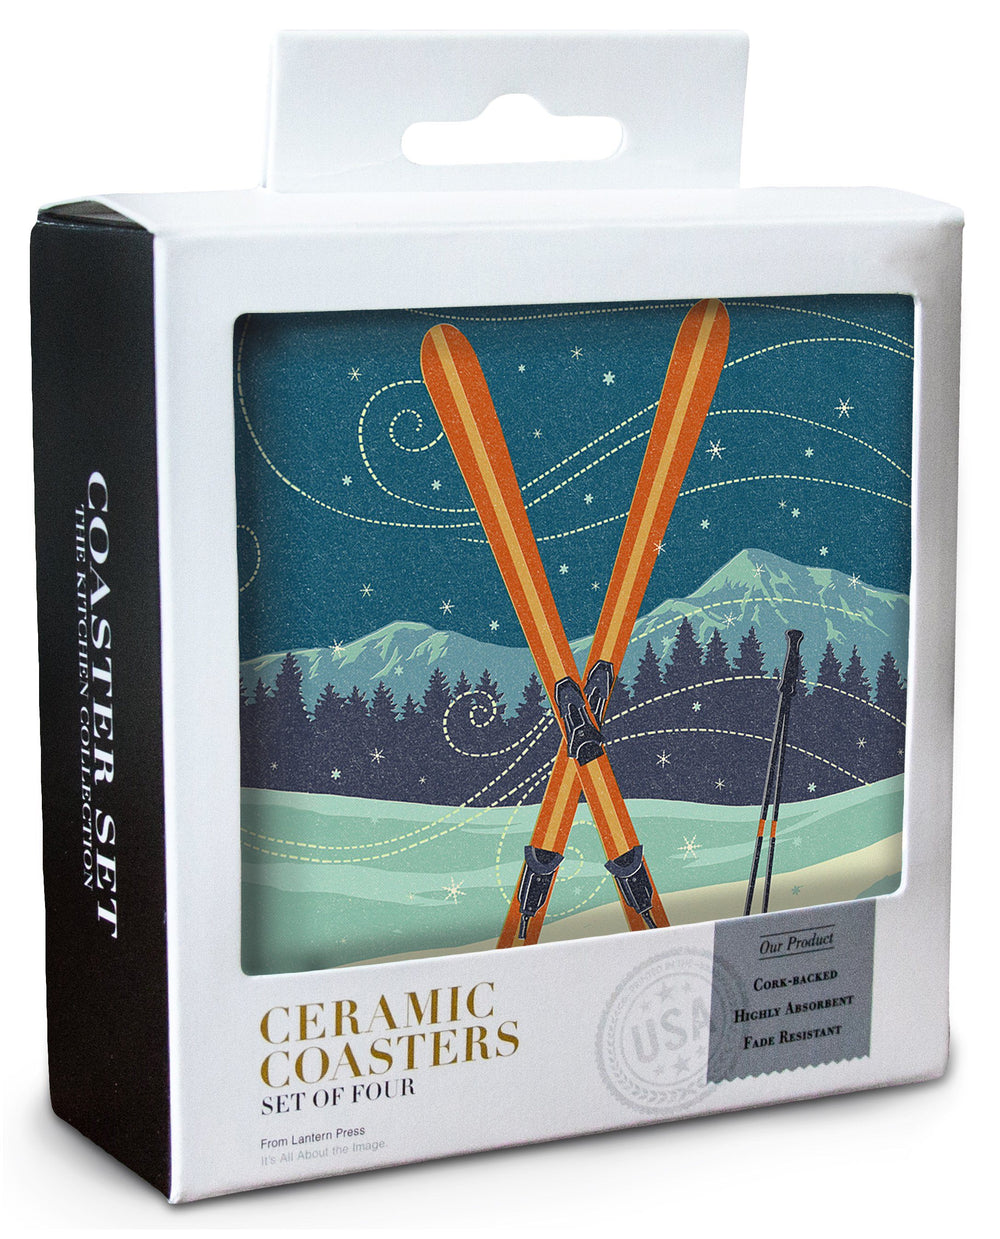 Aspen, Snowmass, Colorado, Crossed Skis Letterpress, Lantern Press Artwork, Coaster Set Coasters Lantern Press 